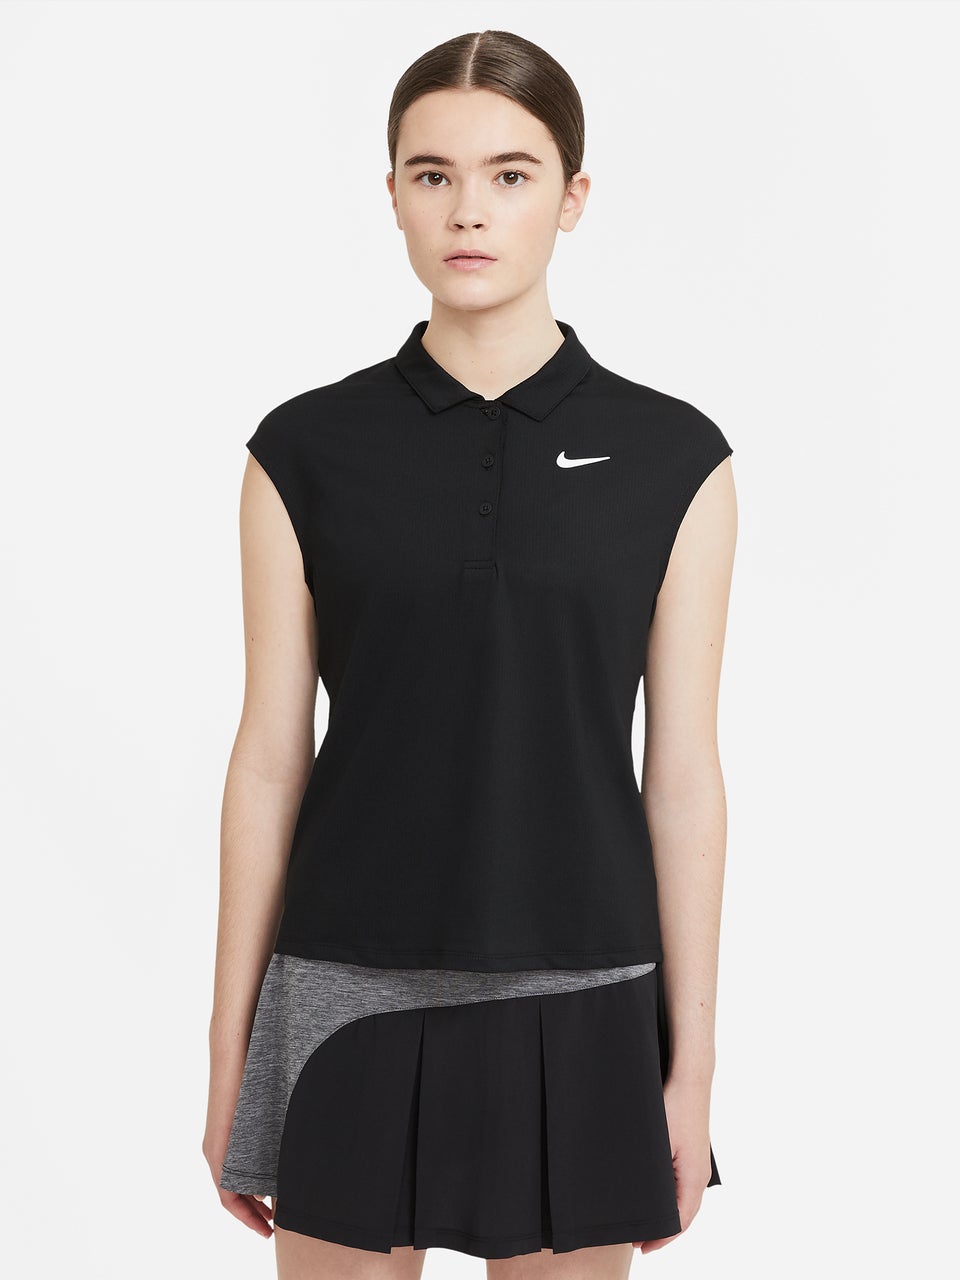 Nike Women's Core Victory Sleeveless Polo | Tennis Warehouse